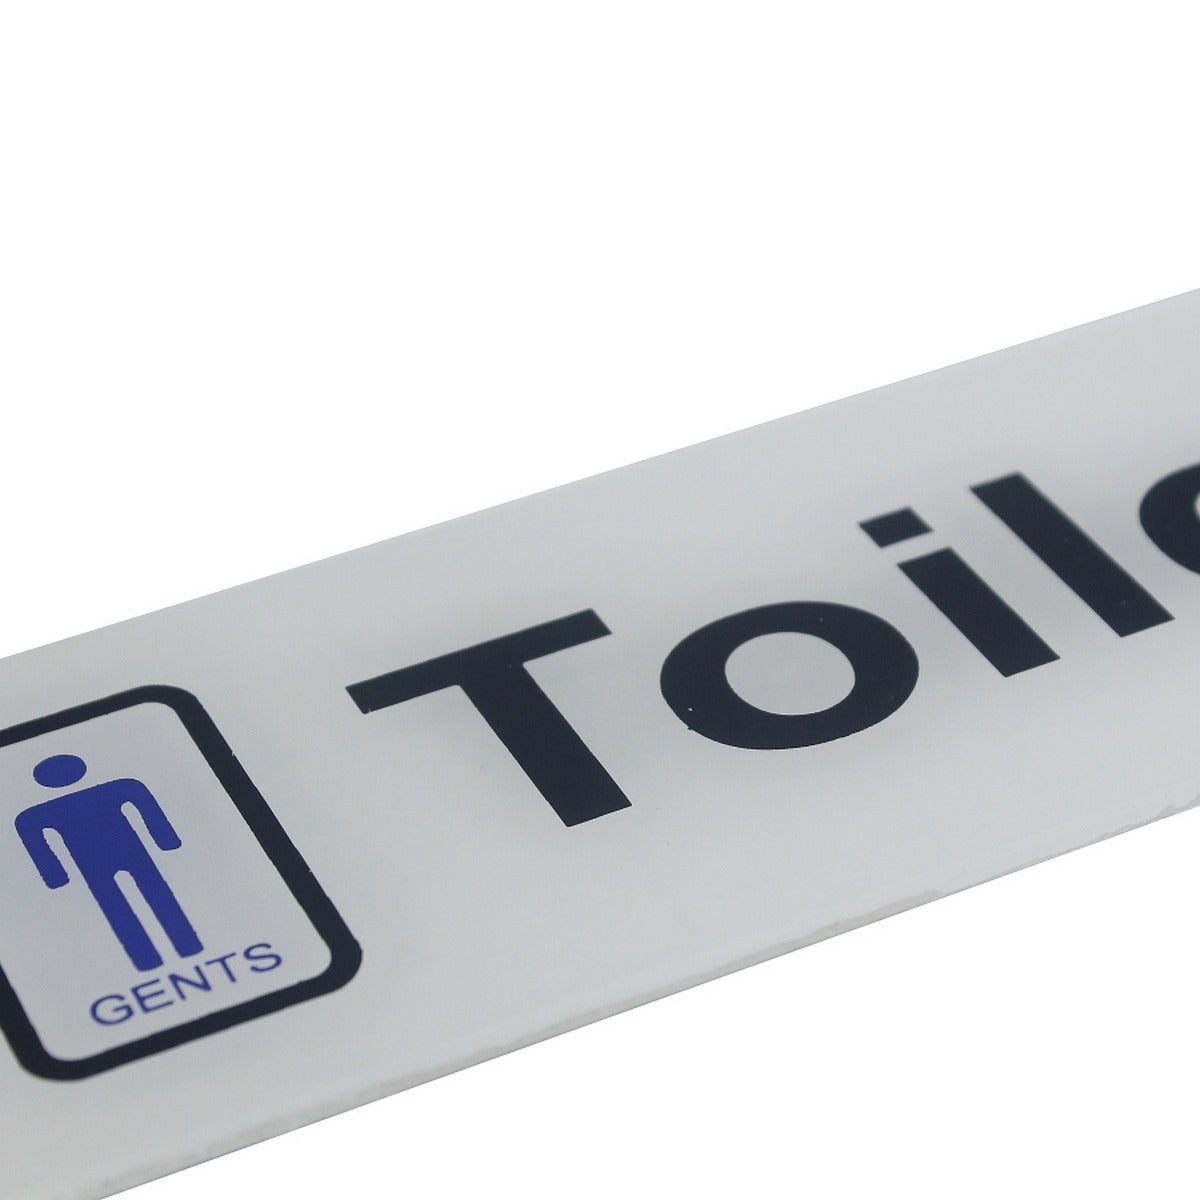 jags-mumbai Stickers Sticker White Gents Toilets